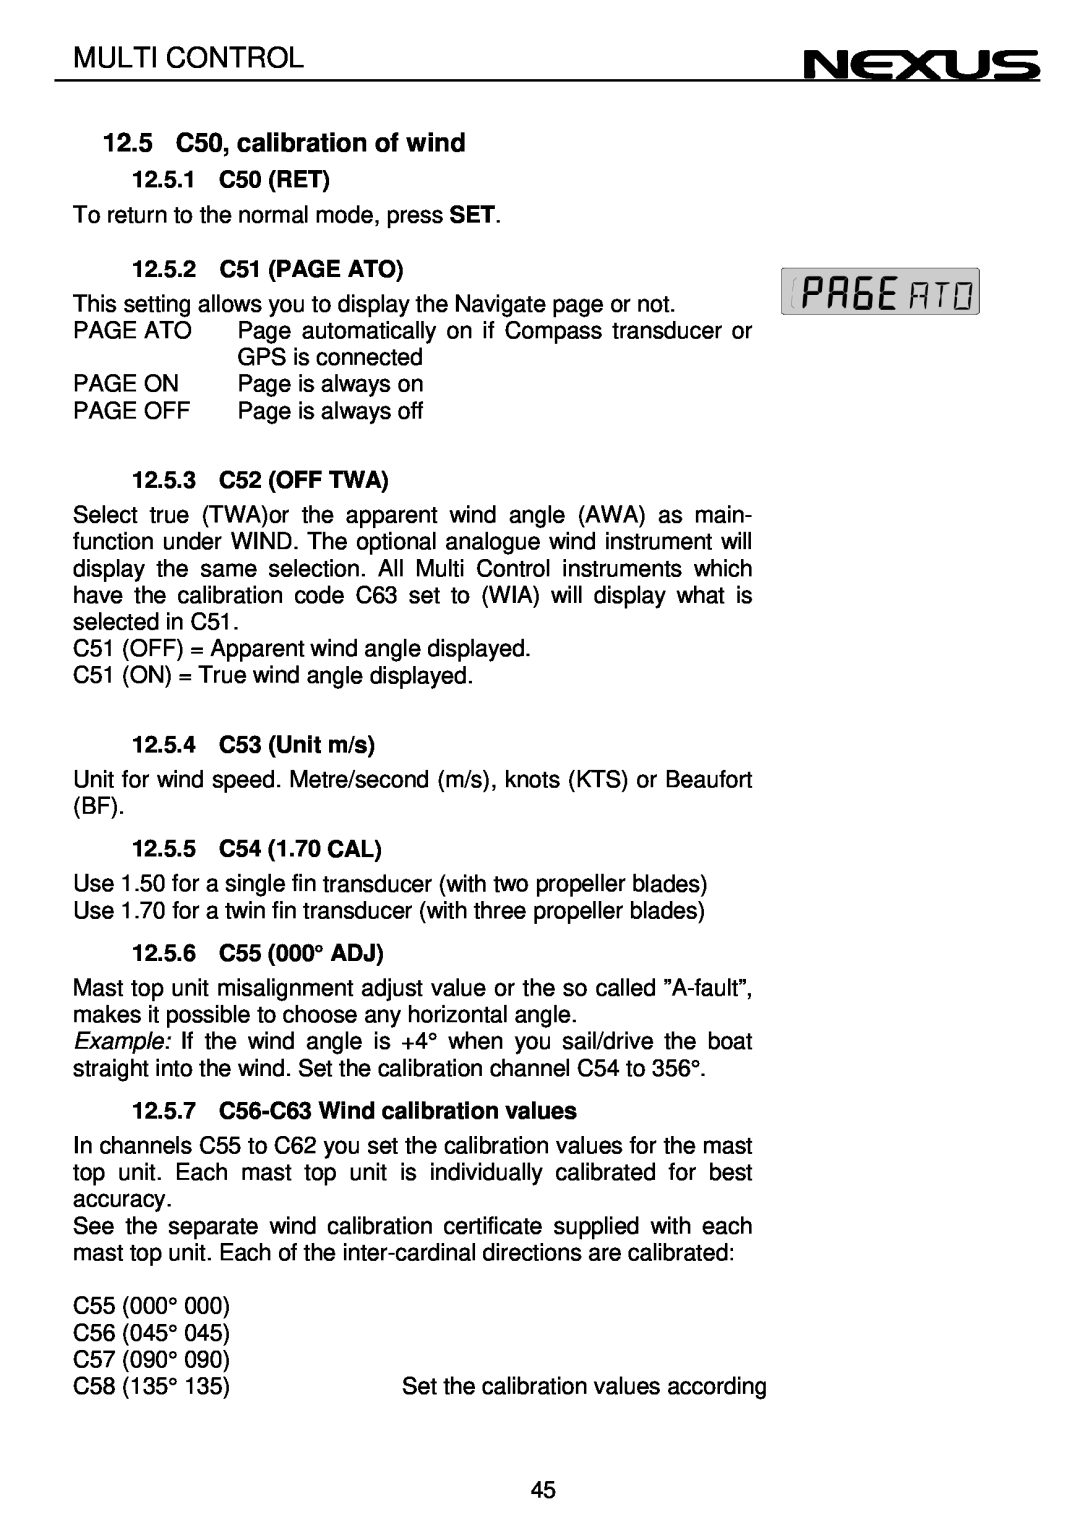 Nexus 21 Multi Control operation manual 12.5C50, calibration of wind, 12.5.1C50 RET, 12.5.2C51 PAGE ATO, 12.5.3C52 OFF TWA 